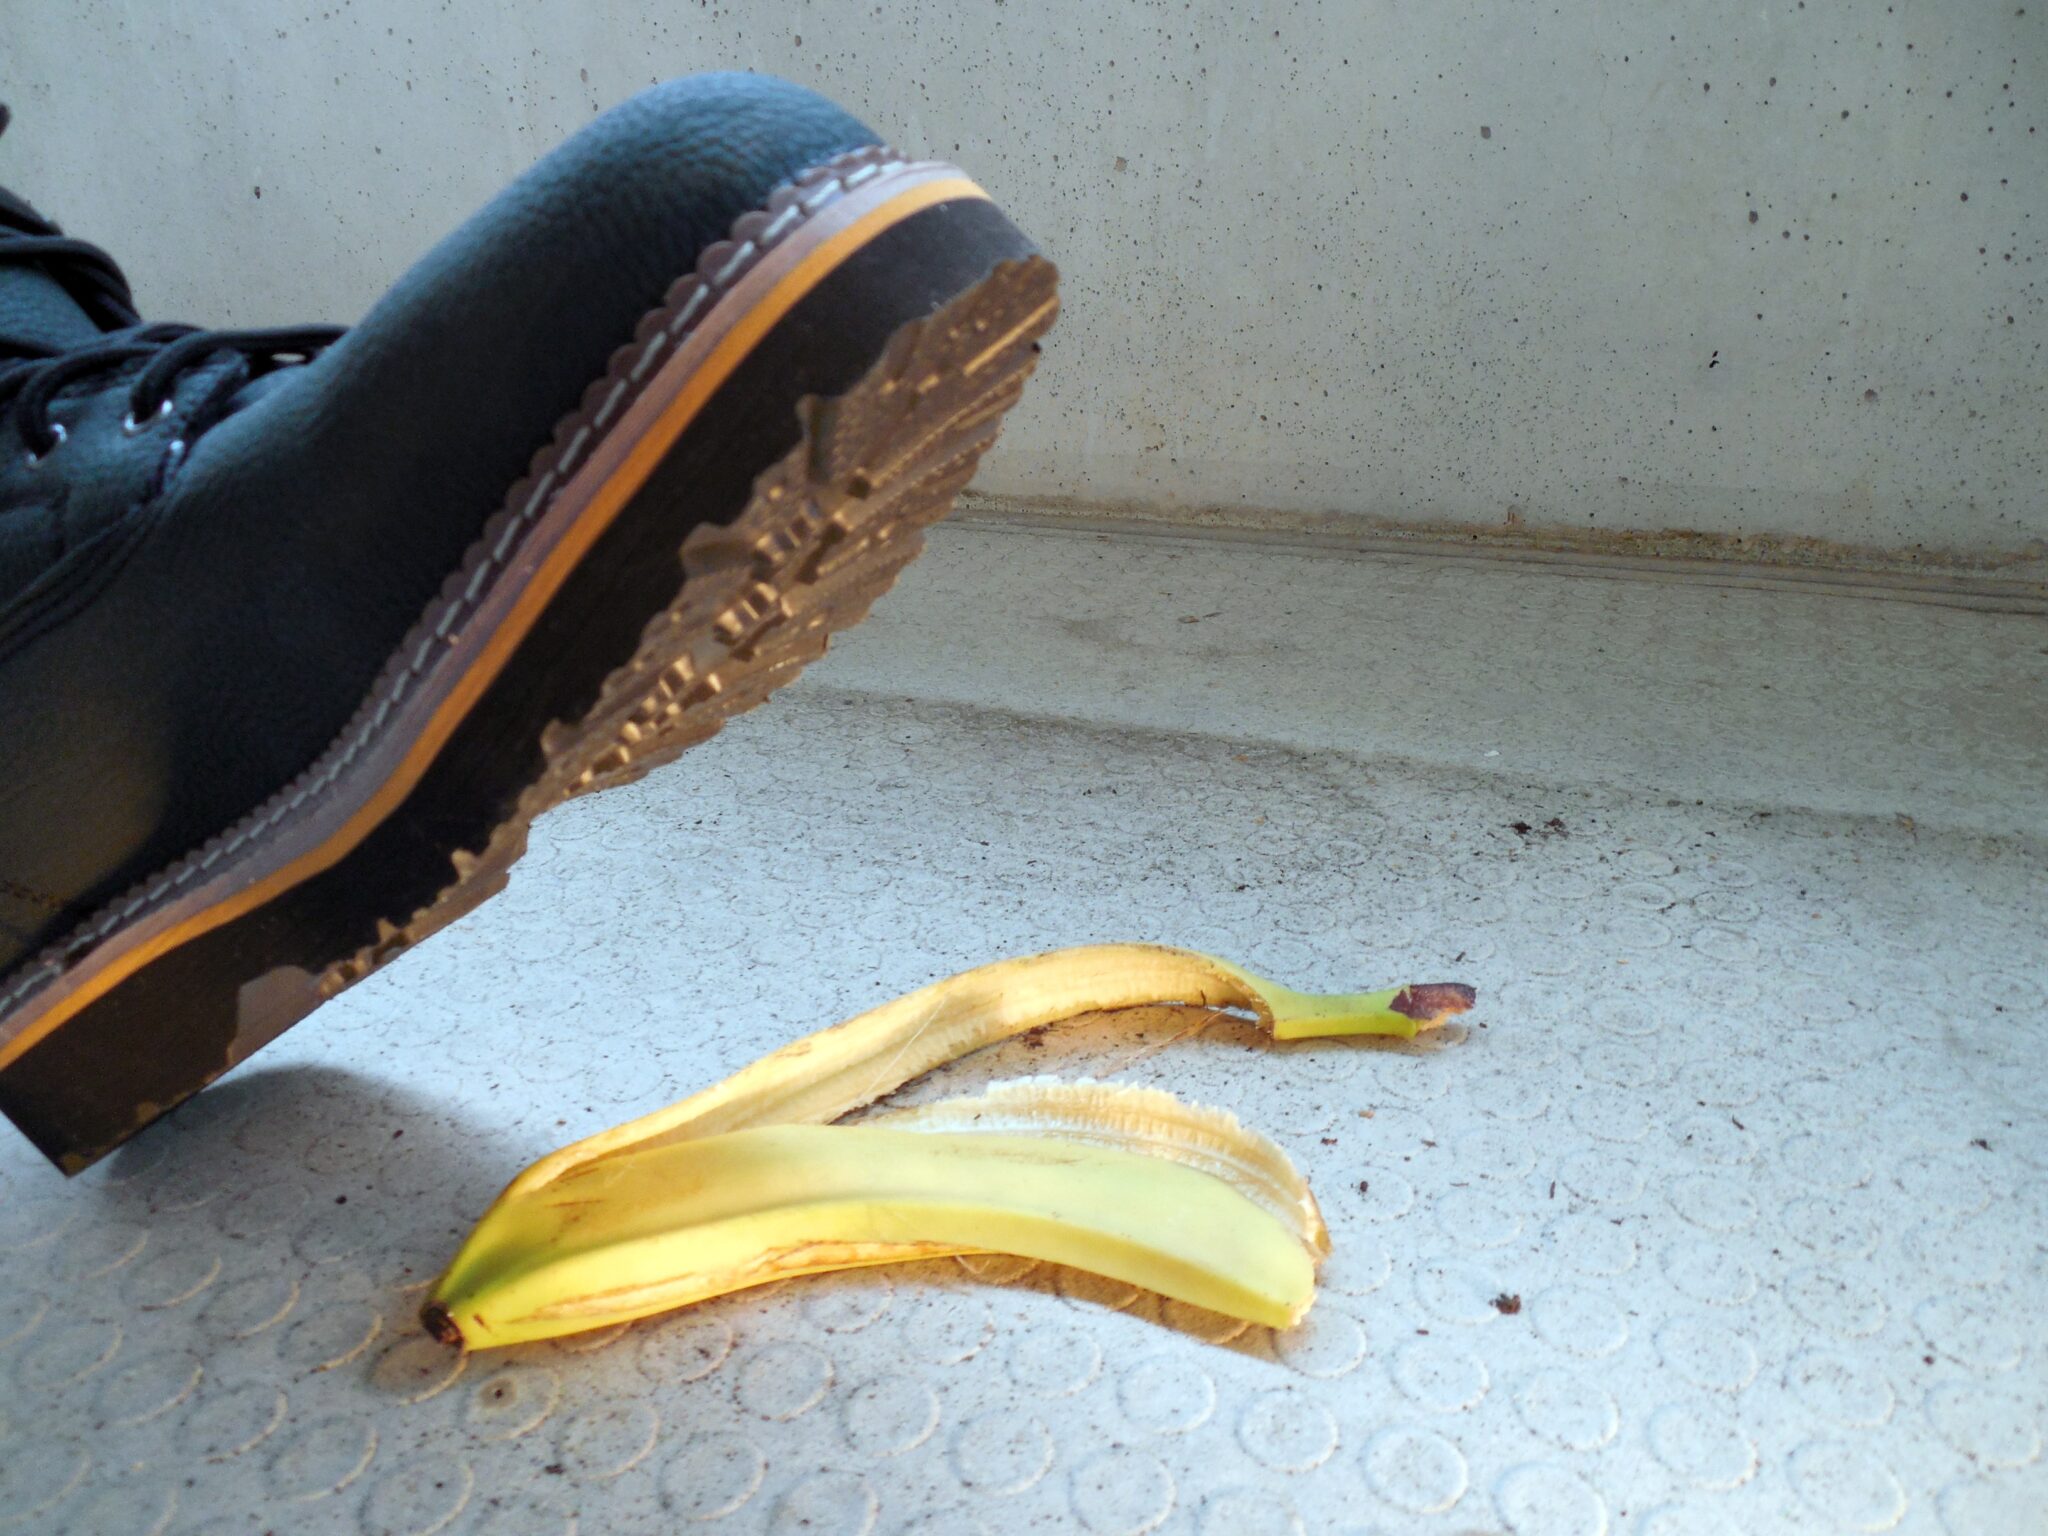 someone stepping on banana peel